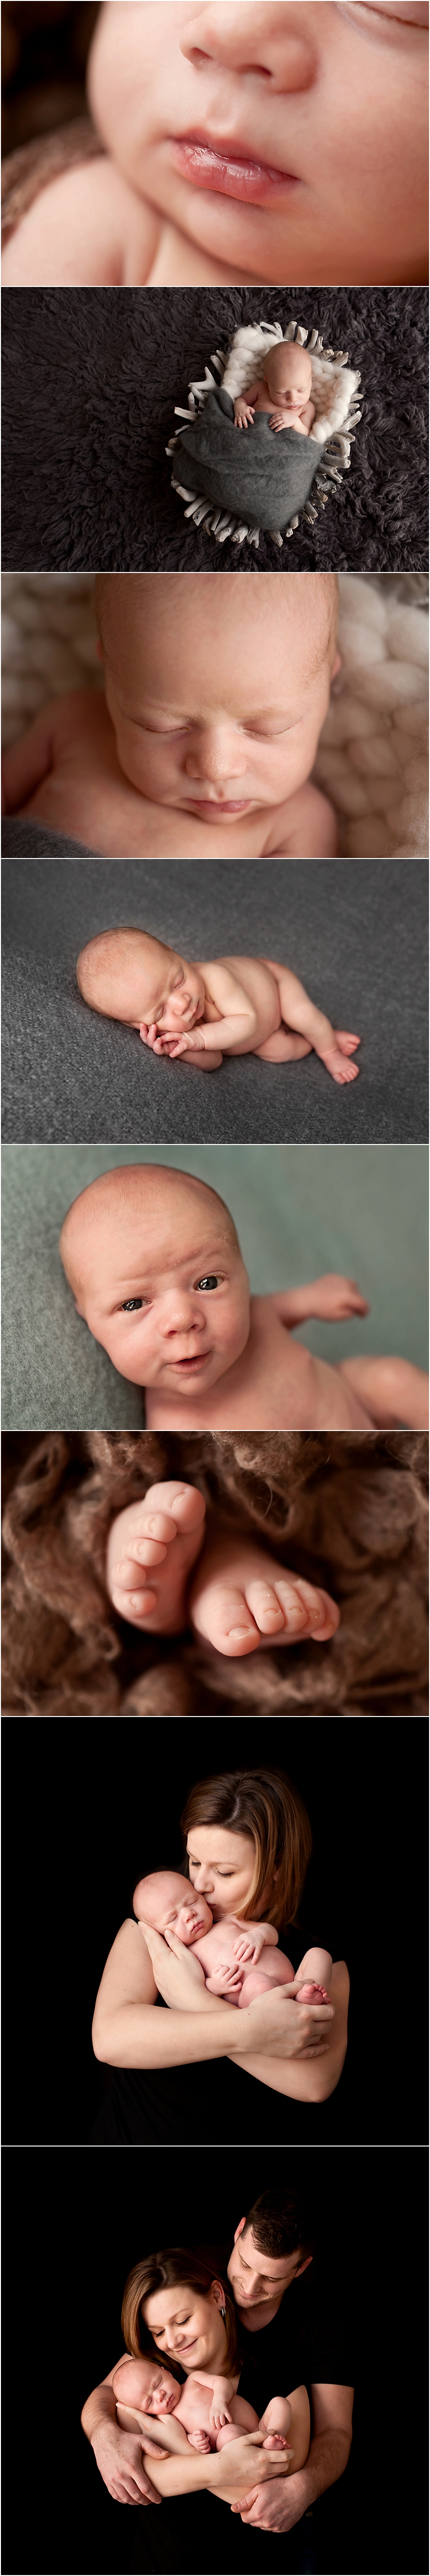 Luuc 15 dagen jong - Newborn fotoshoot Lent